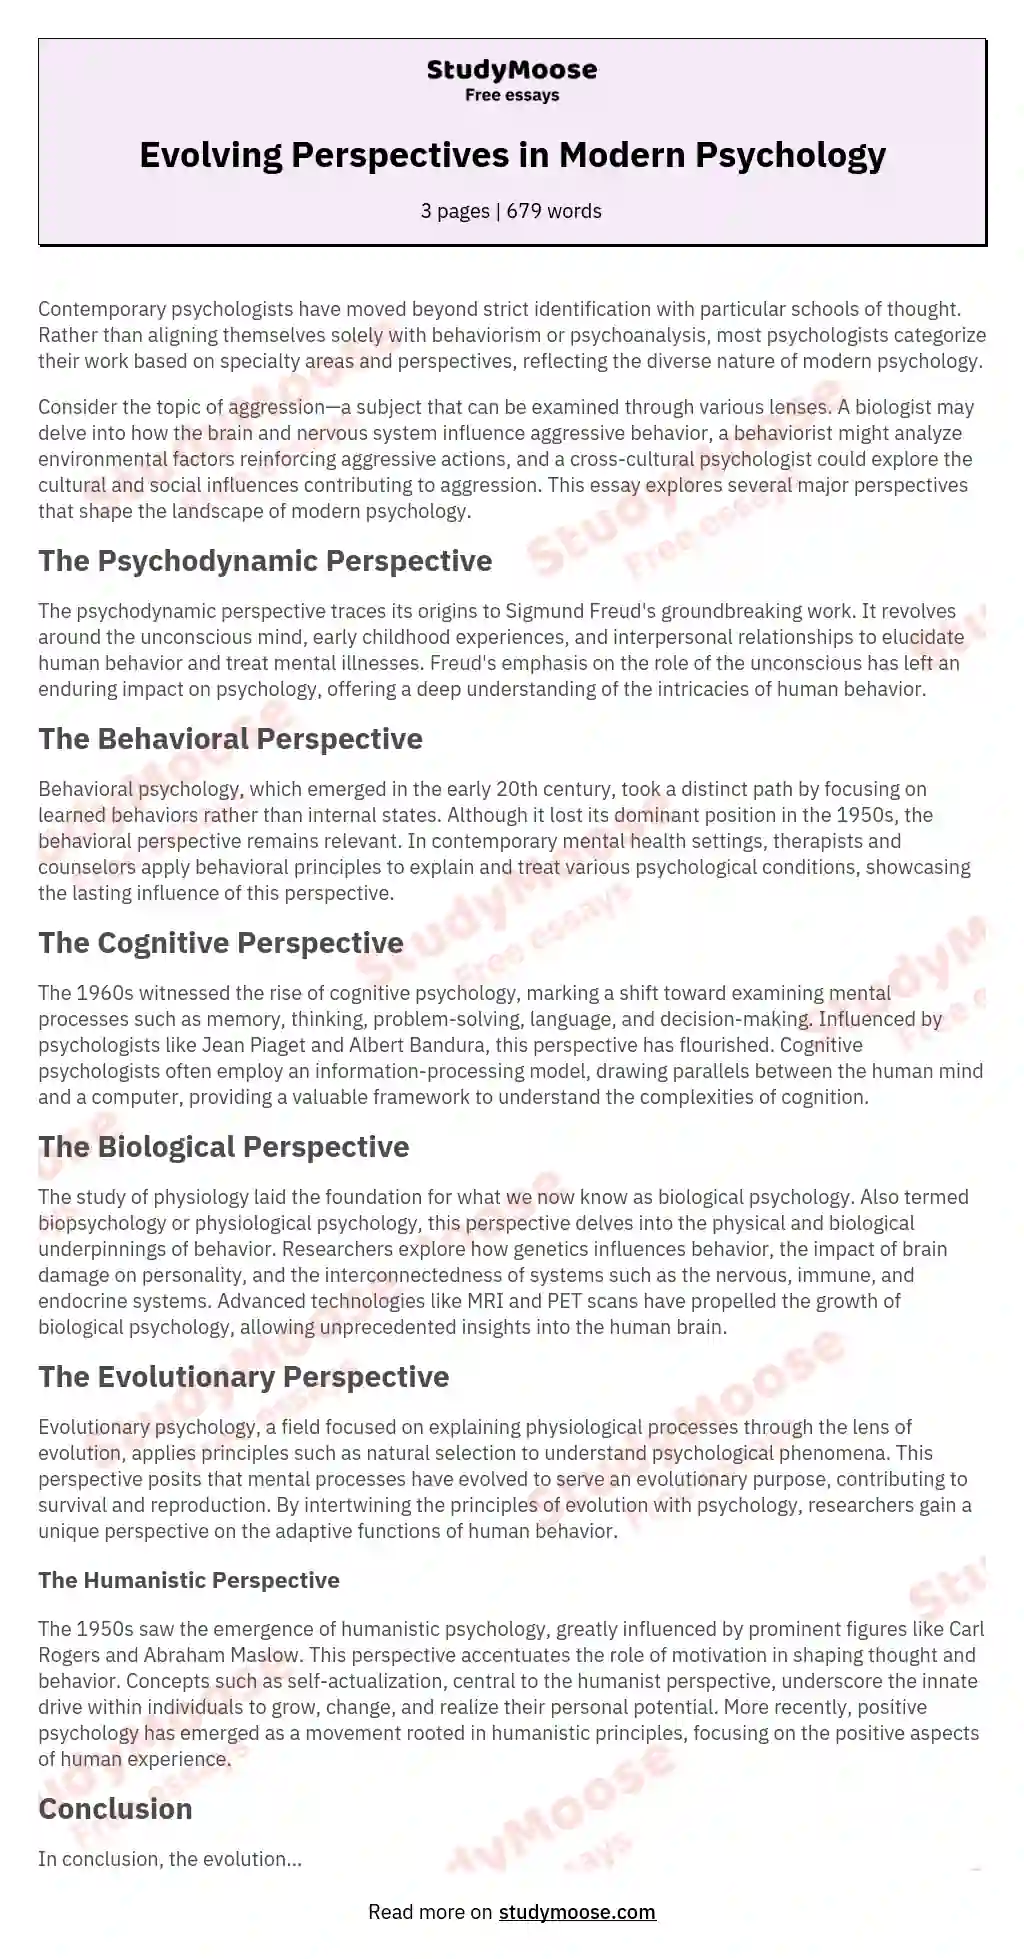 Evolving Perspectives in Modern Psychology essay